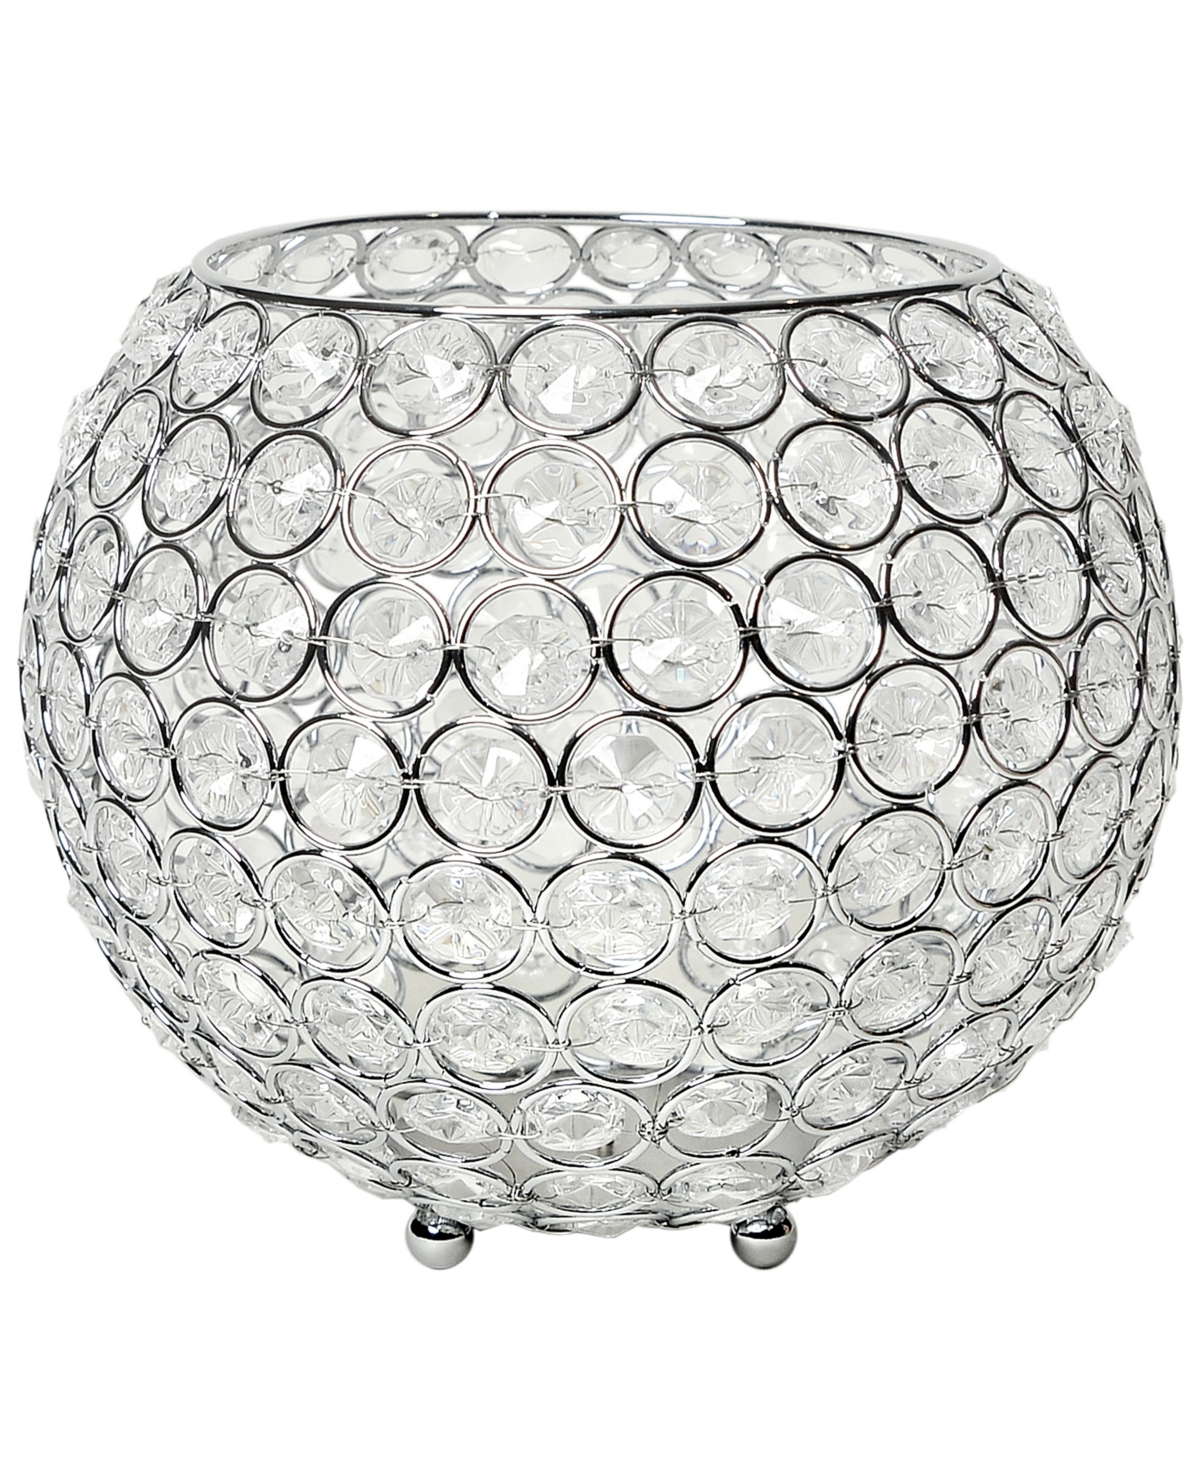 Elipse Crystal Circular Bowl Candle Holder, Flower Vase, Wedding Centerpiece - Chrome